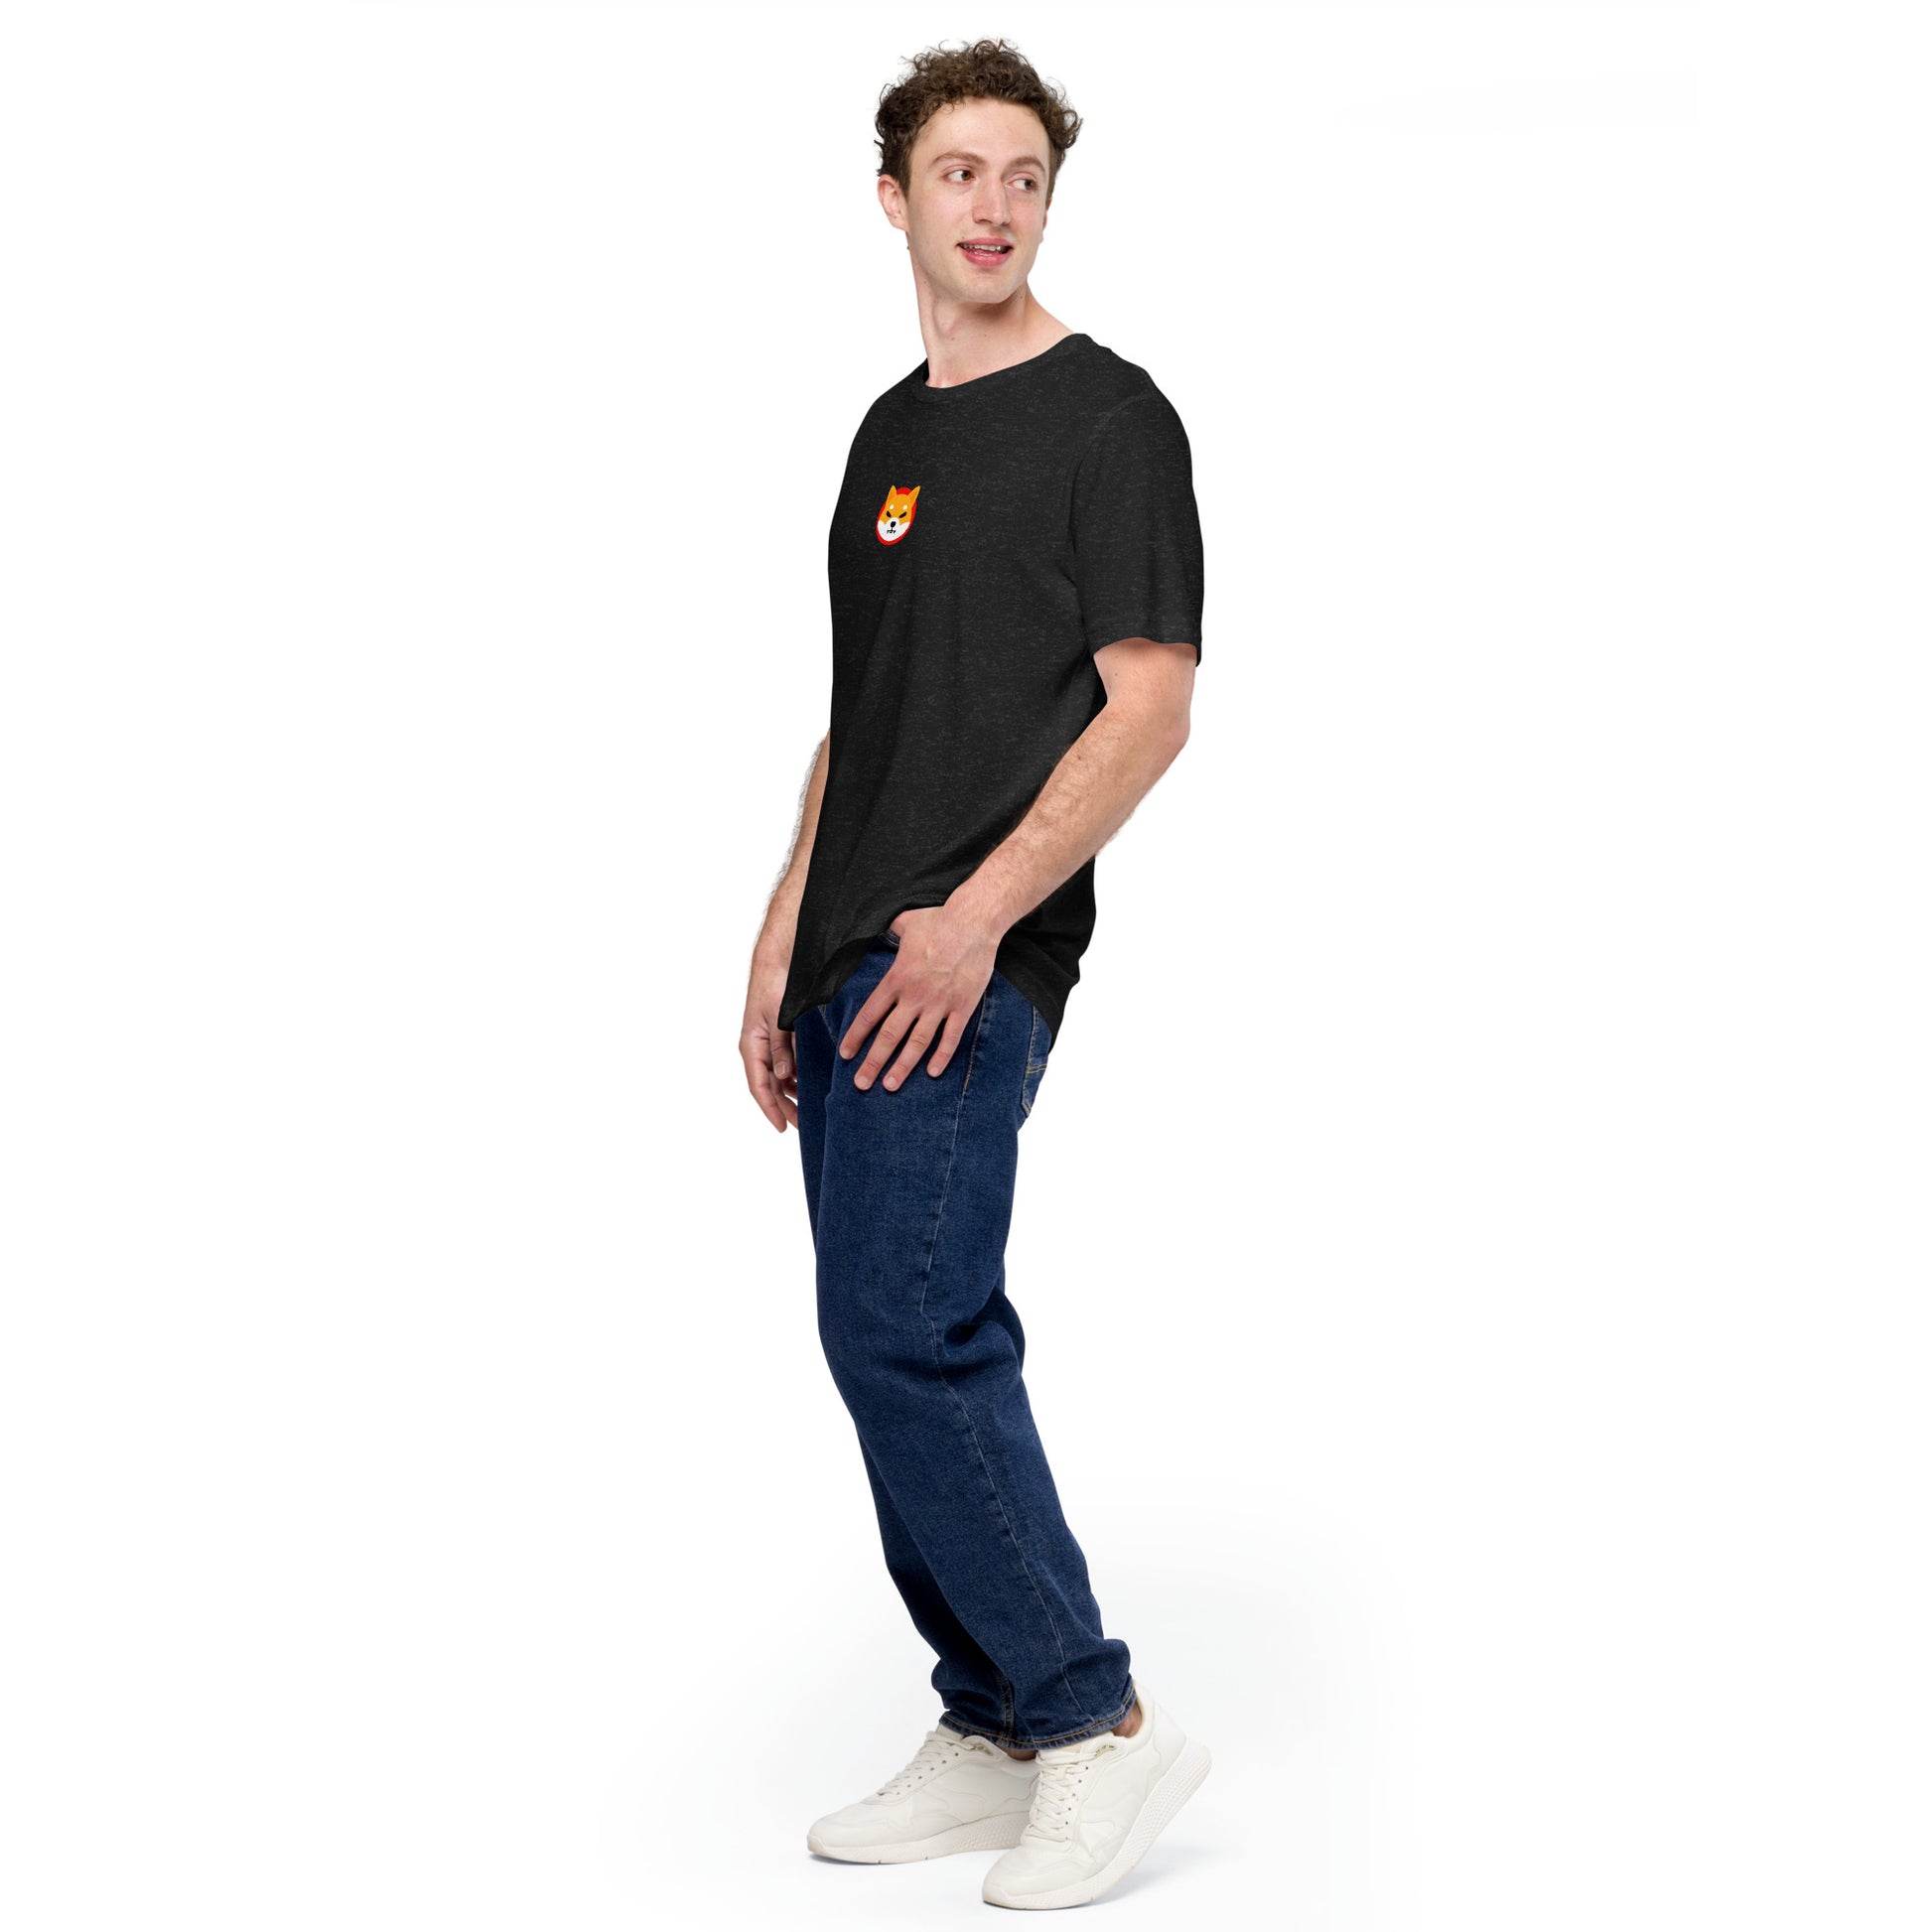 Shiba Inu T-shirt - Hodlers Crypto Merch Brand